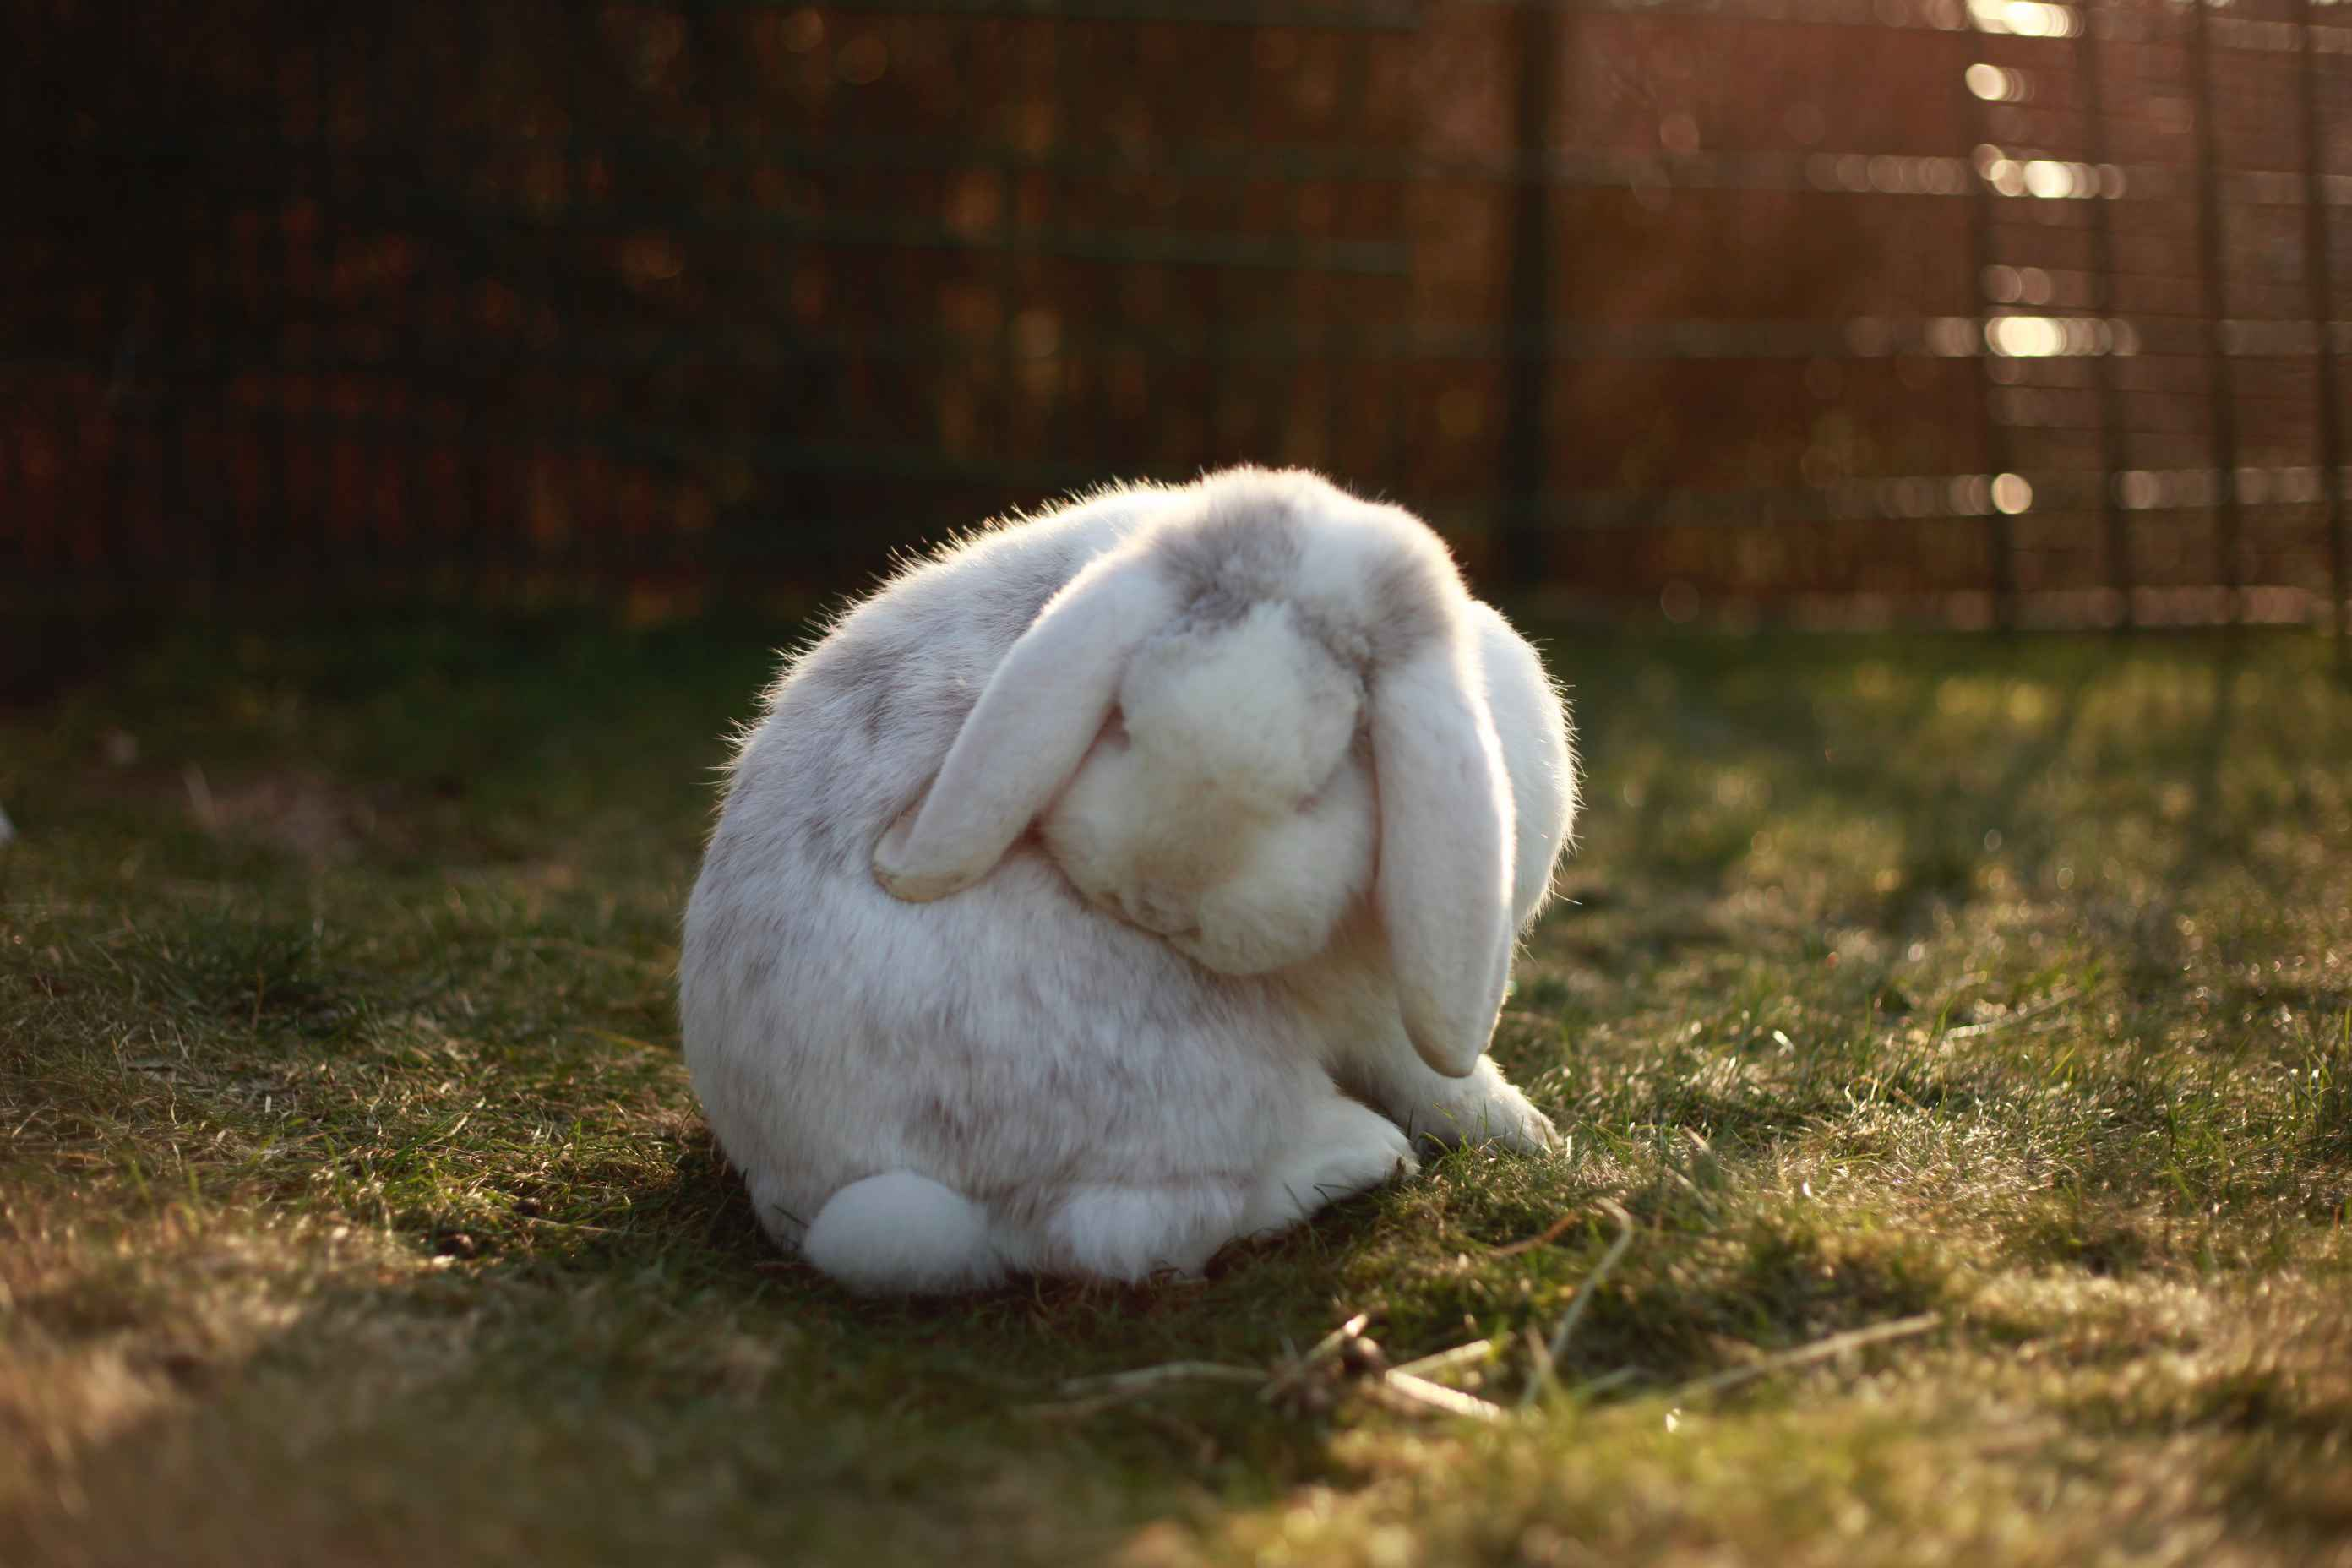 Rabbit Seizure Symptoms: How to Recognize if Your Pet is Having a Seizure